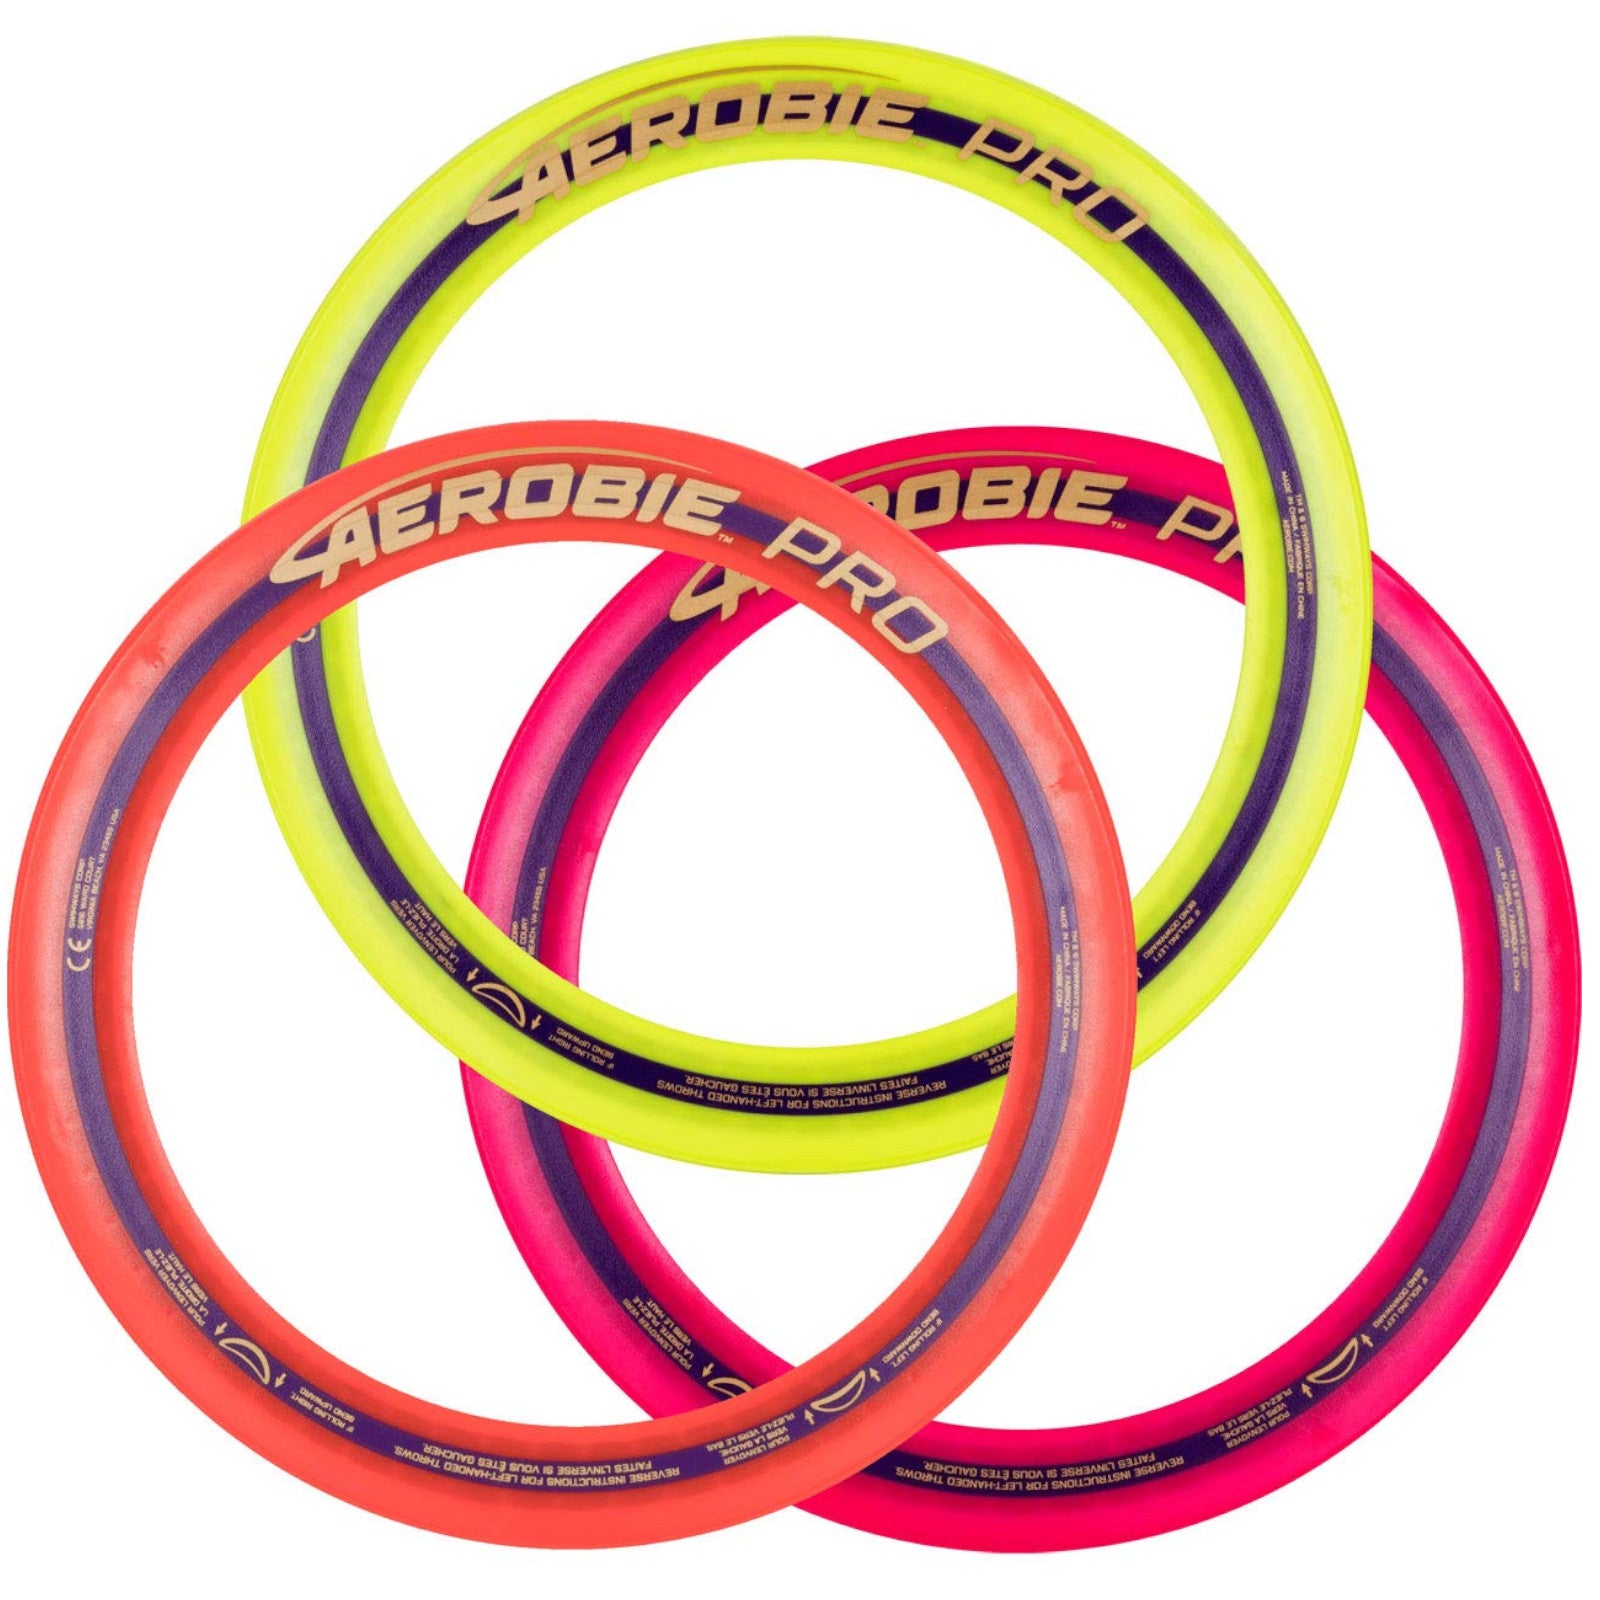 Aerobie Pro 13" Ringaerobie Sports Flying Disc Ring Frisbee Alternate 1